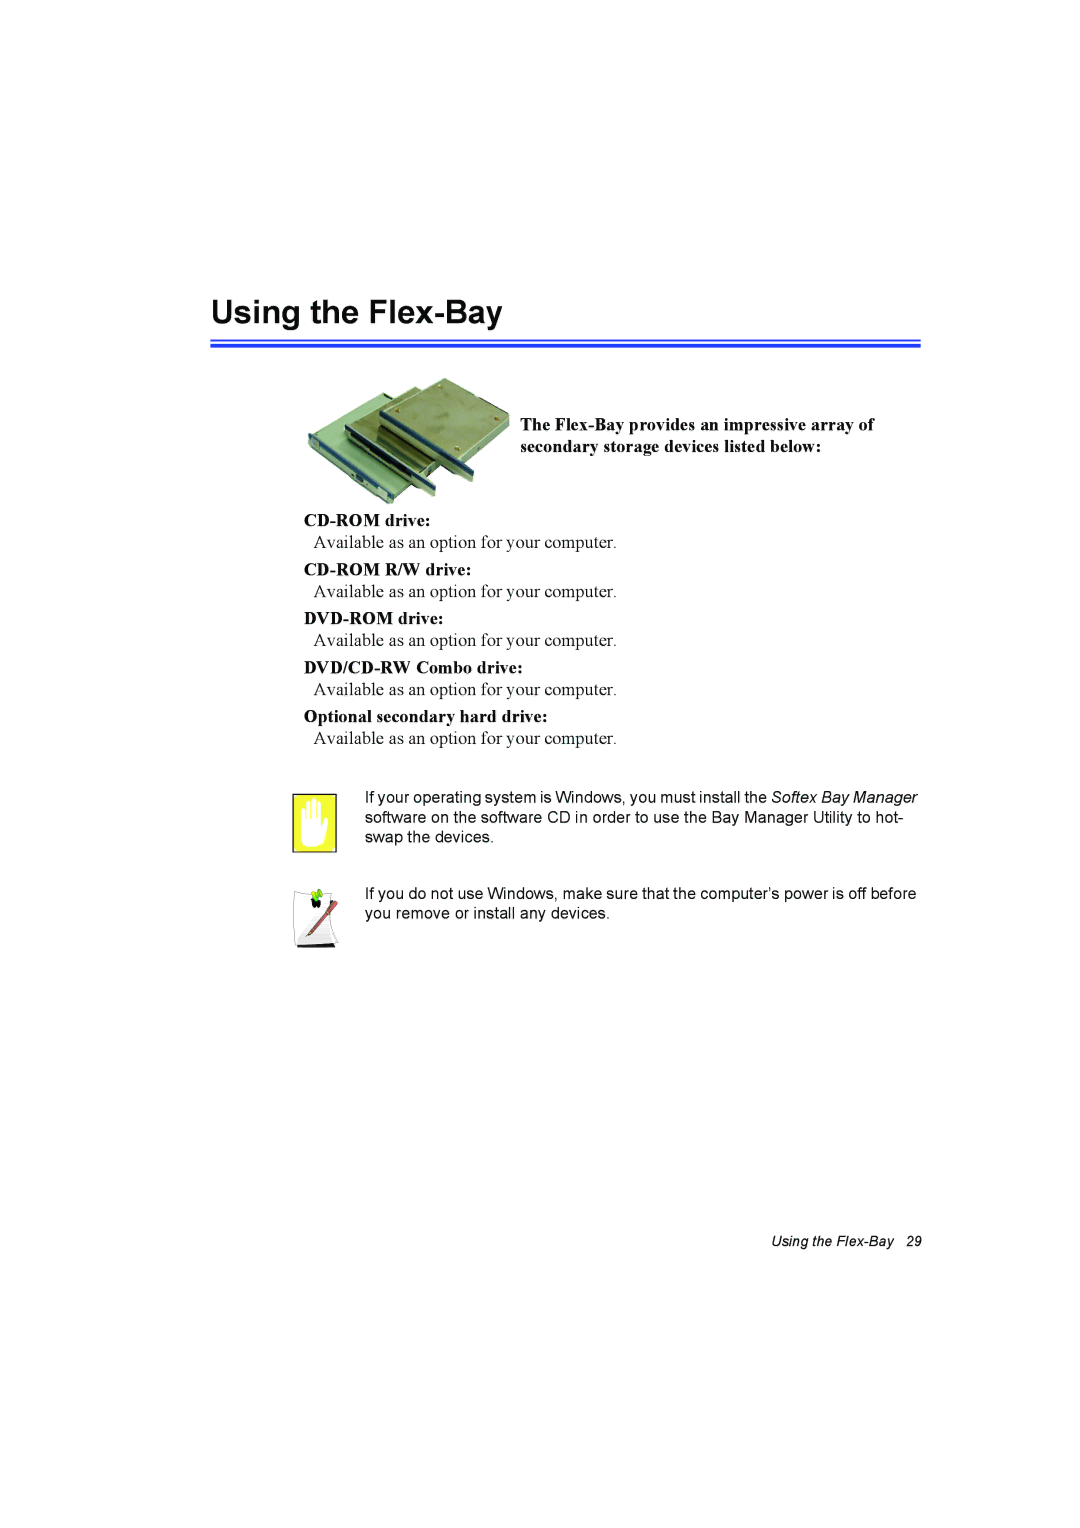 Samsung NP10FP03NV/SEF, NP10FP02CD/SEG manual Using the Flex-Bay, CD-ROM R/W drive, DVD-ROM drive, DVD/CD-RW Combo drive 